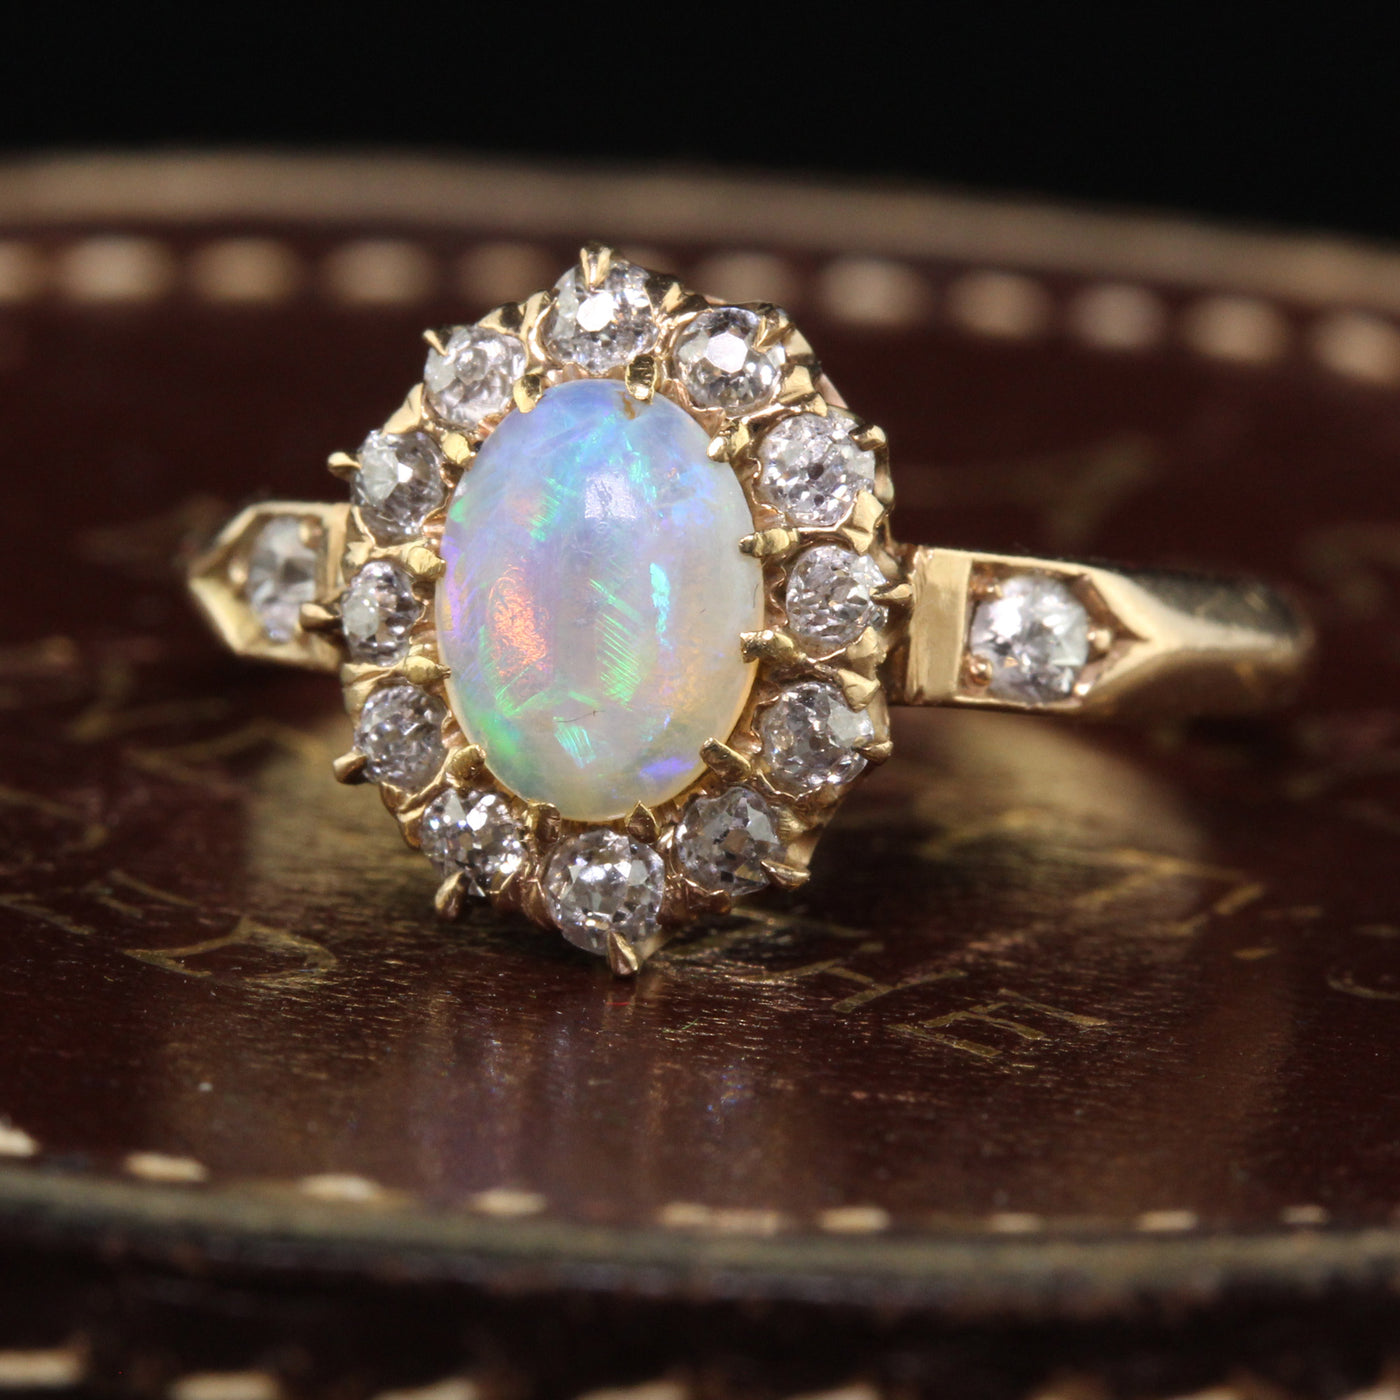 Vintage Opal Rings | Striking Antique Opal Rings | The Chelsea Bijouterie